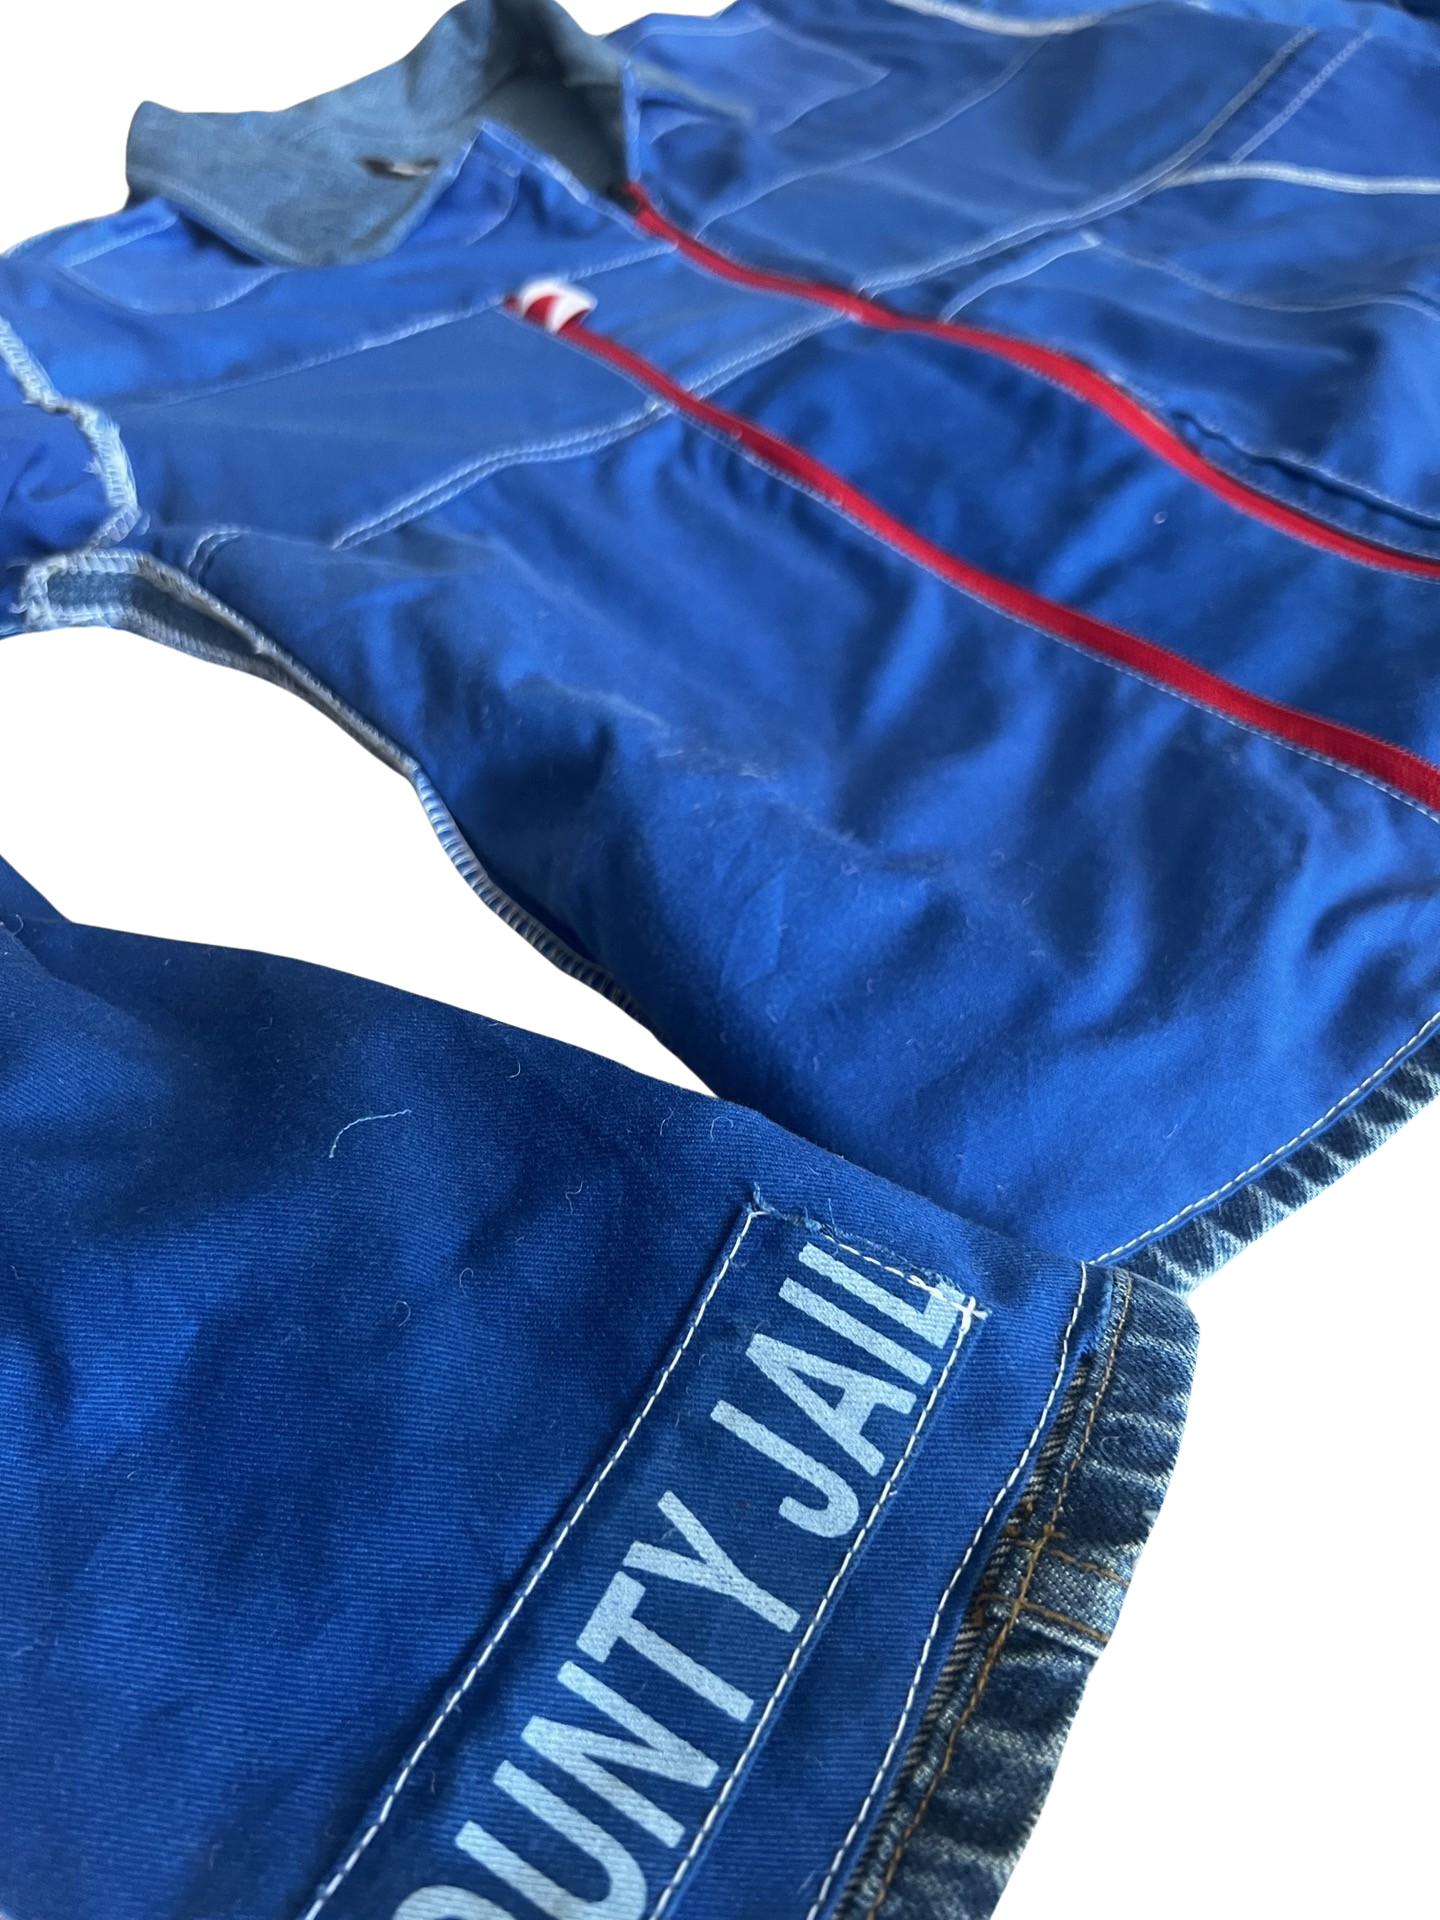 [Preorder] R3 Reform Denim Jacket Homeboy Threads x ThreadHaus (1 Color)